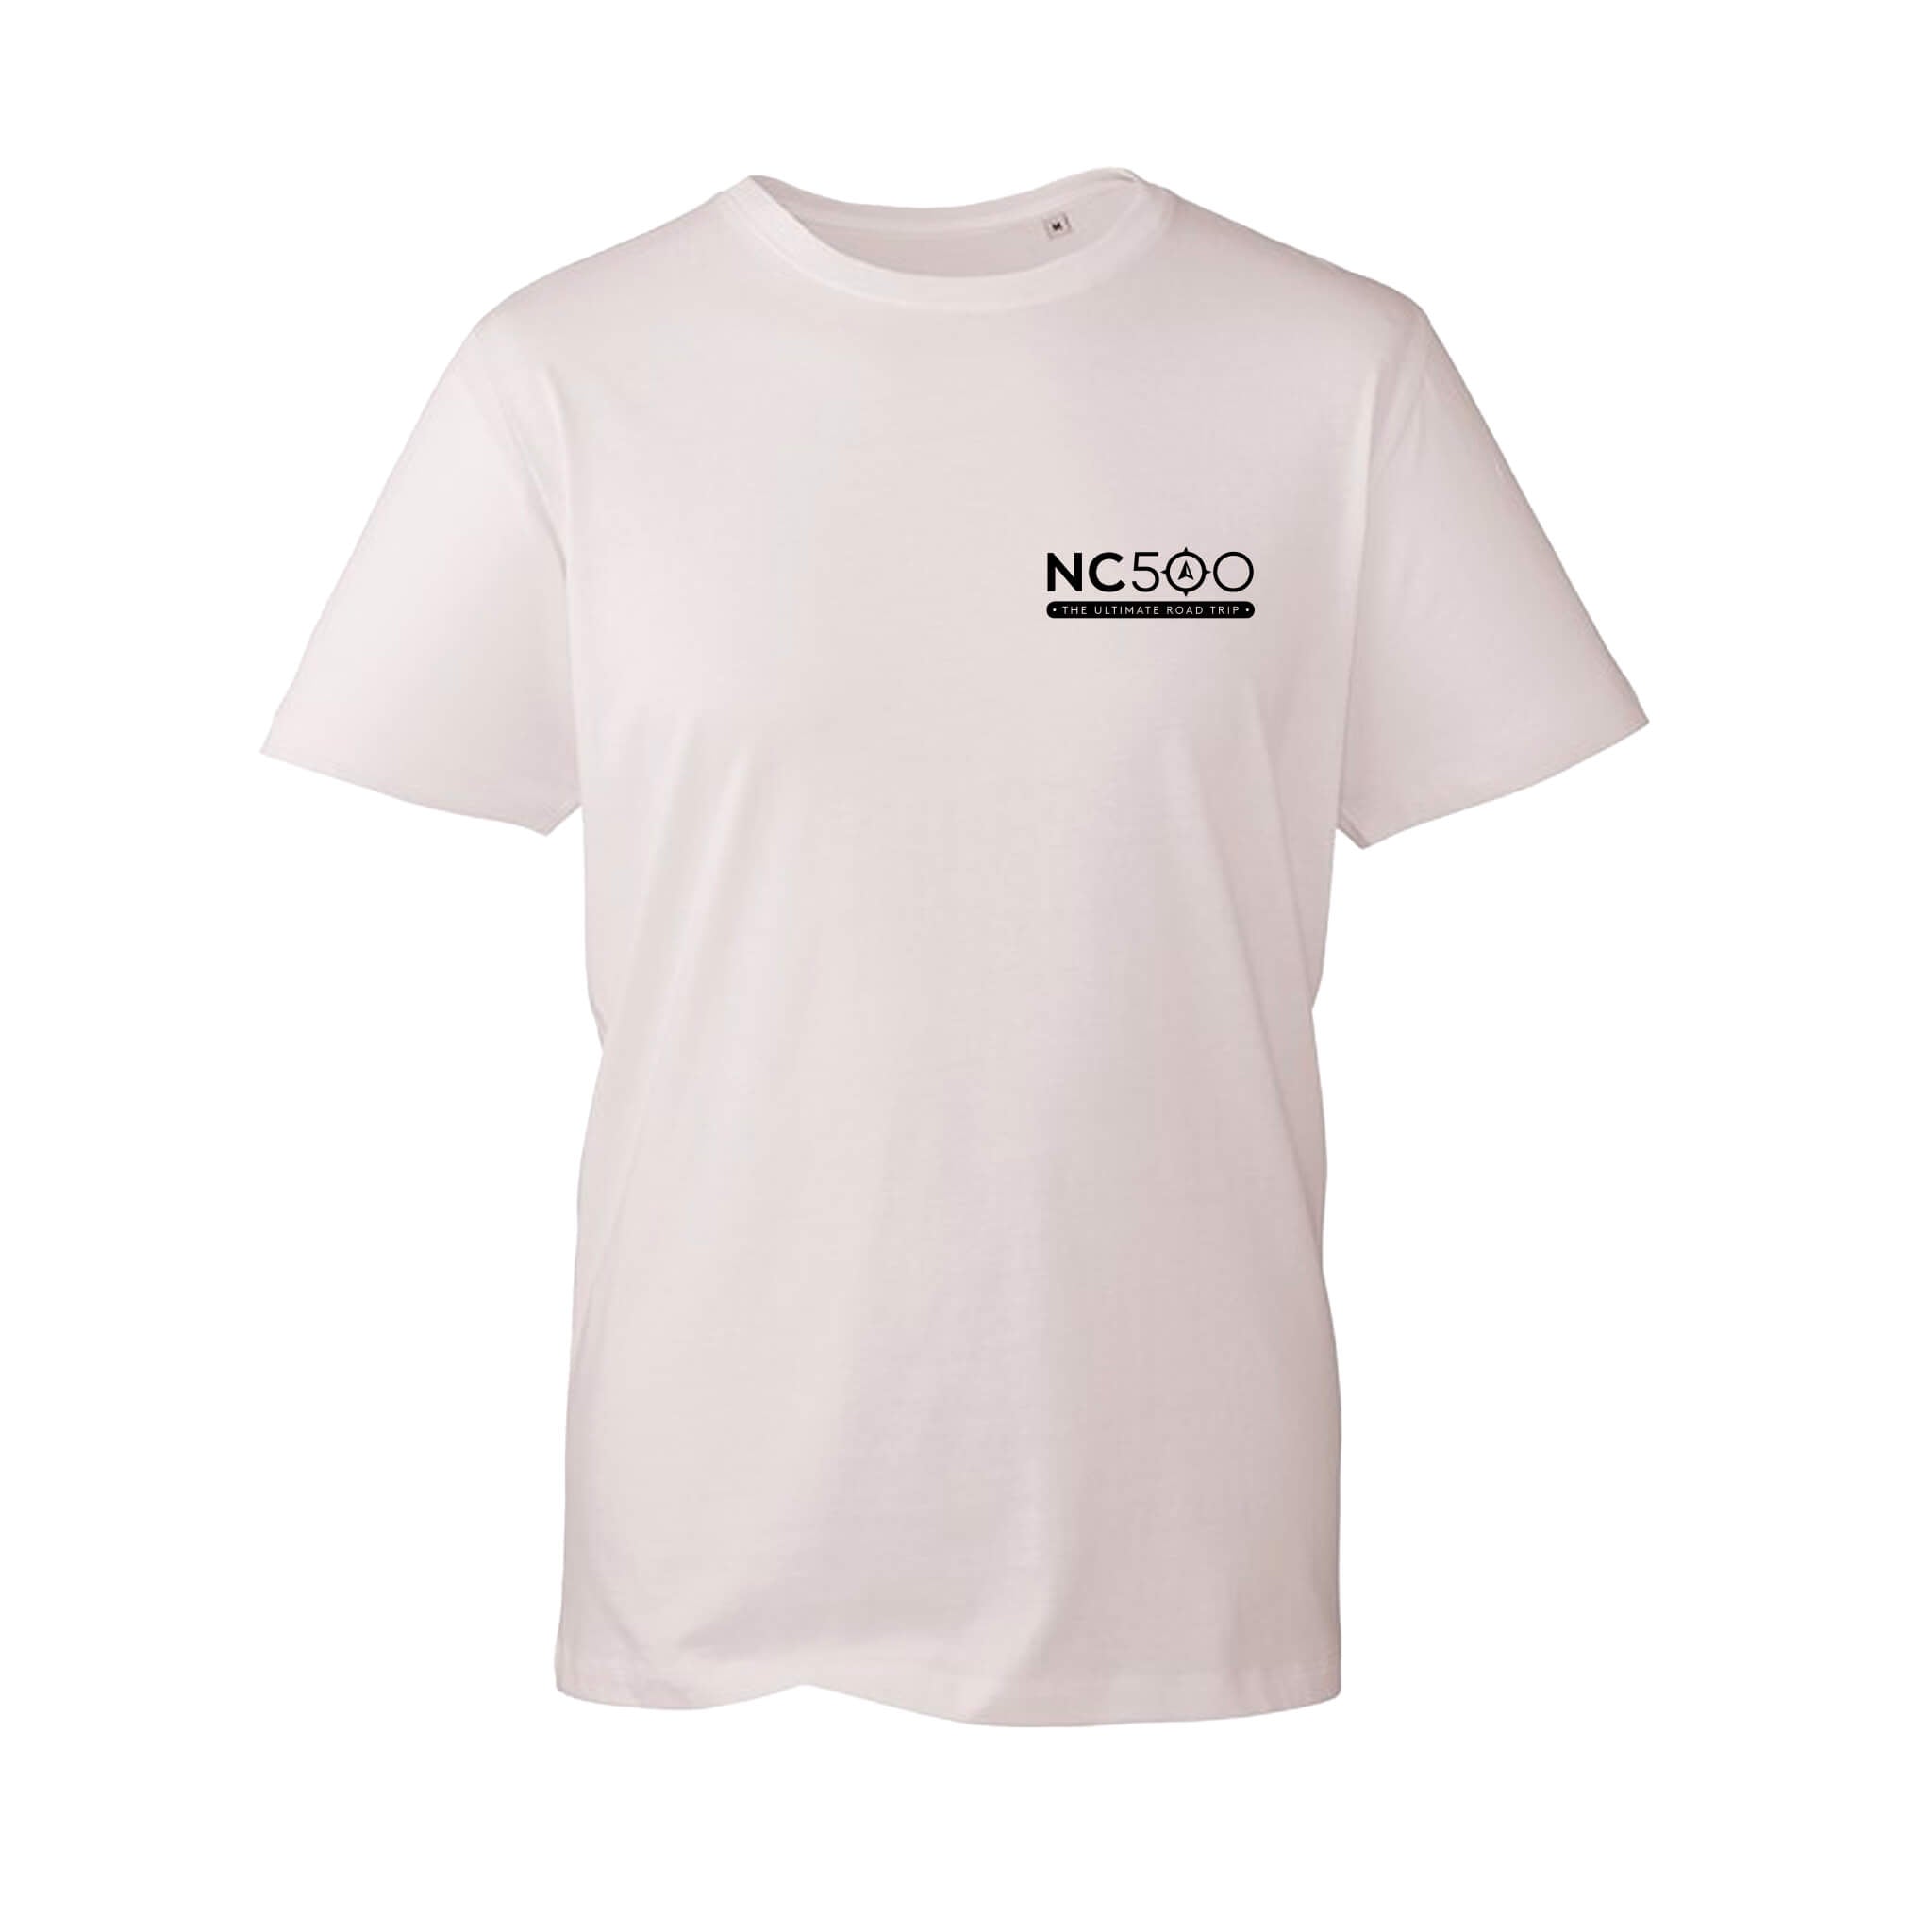 Explore Organic Cotton T-Shirt - White - Front View - North Coast 500